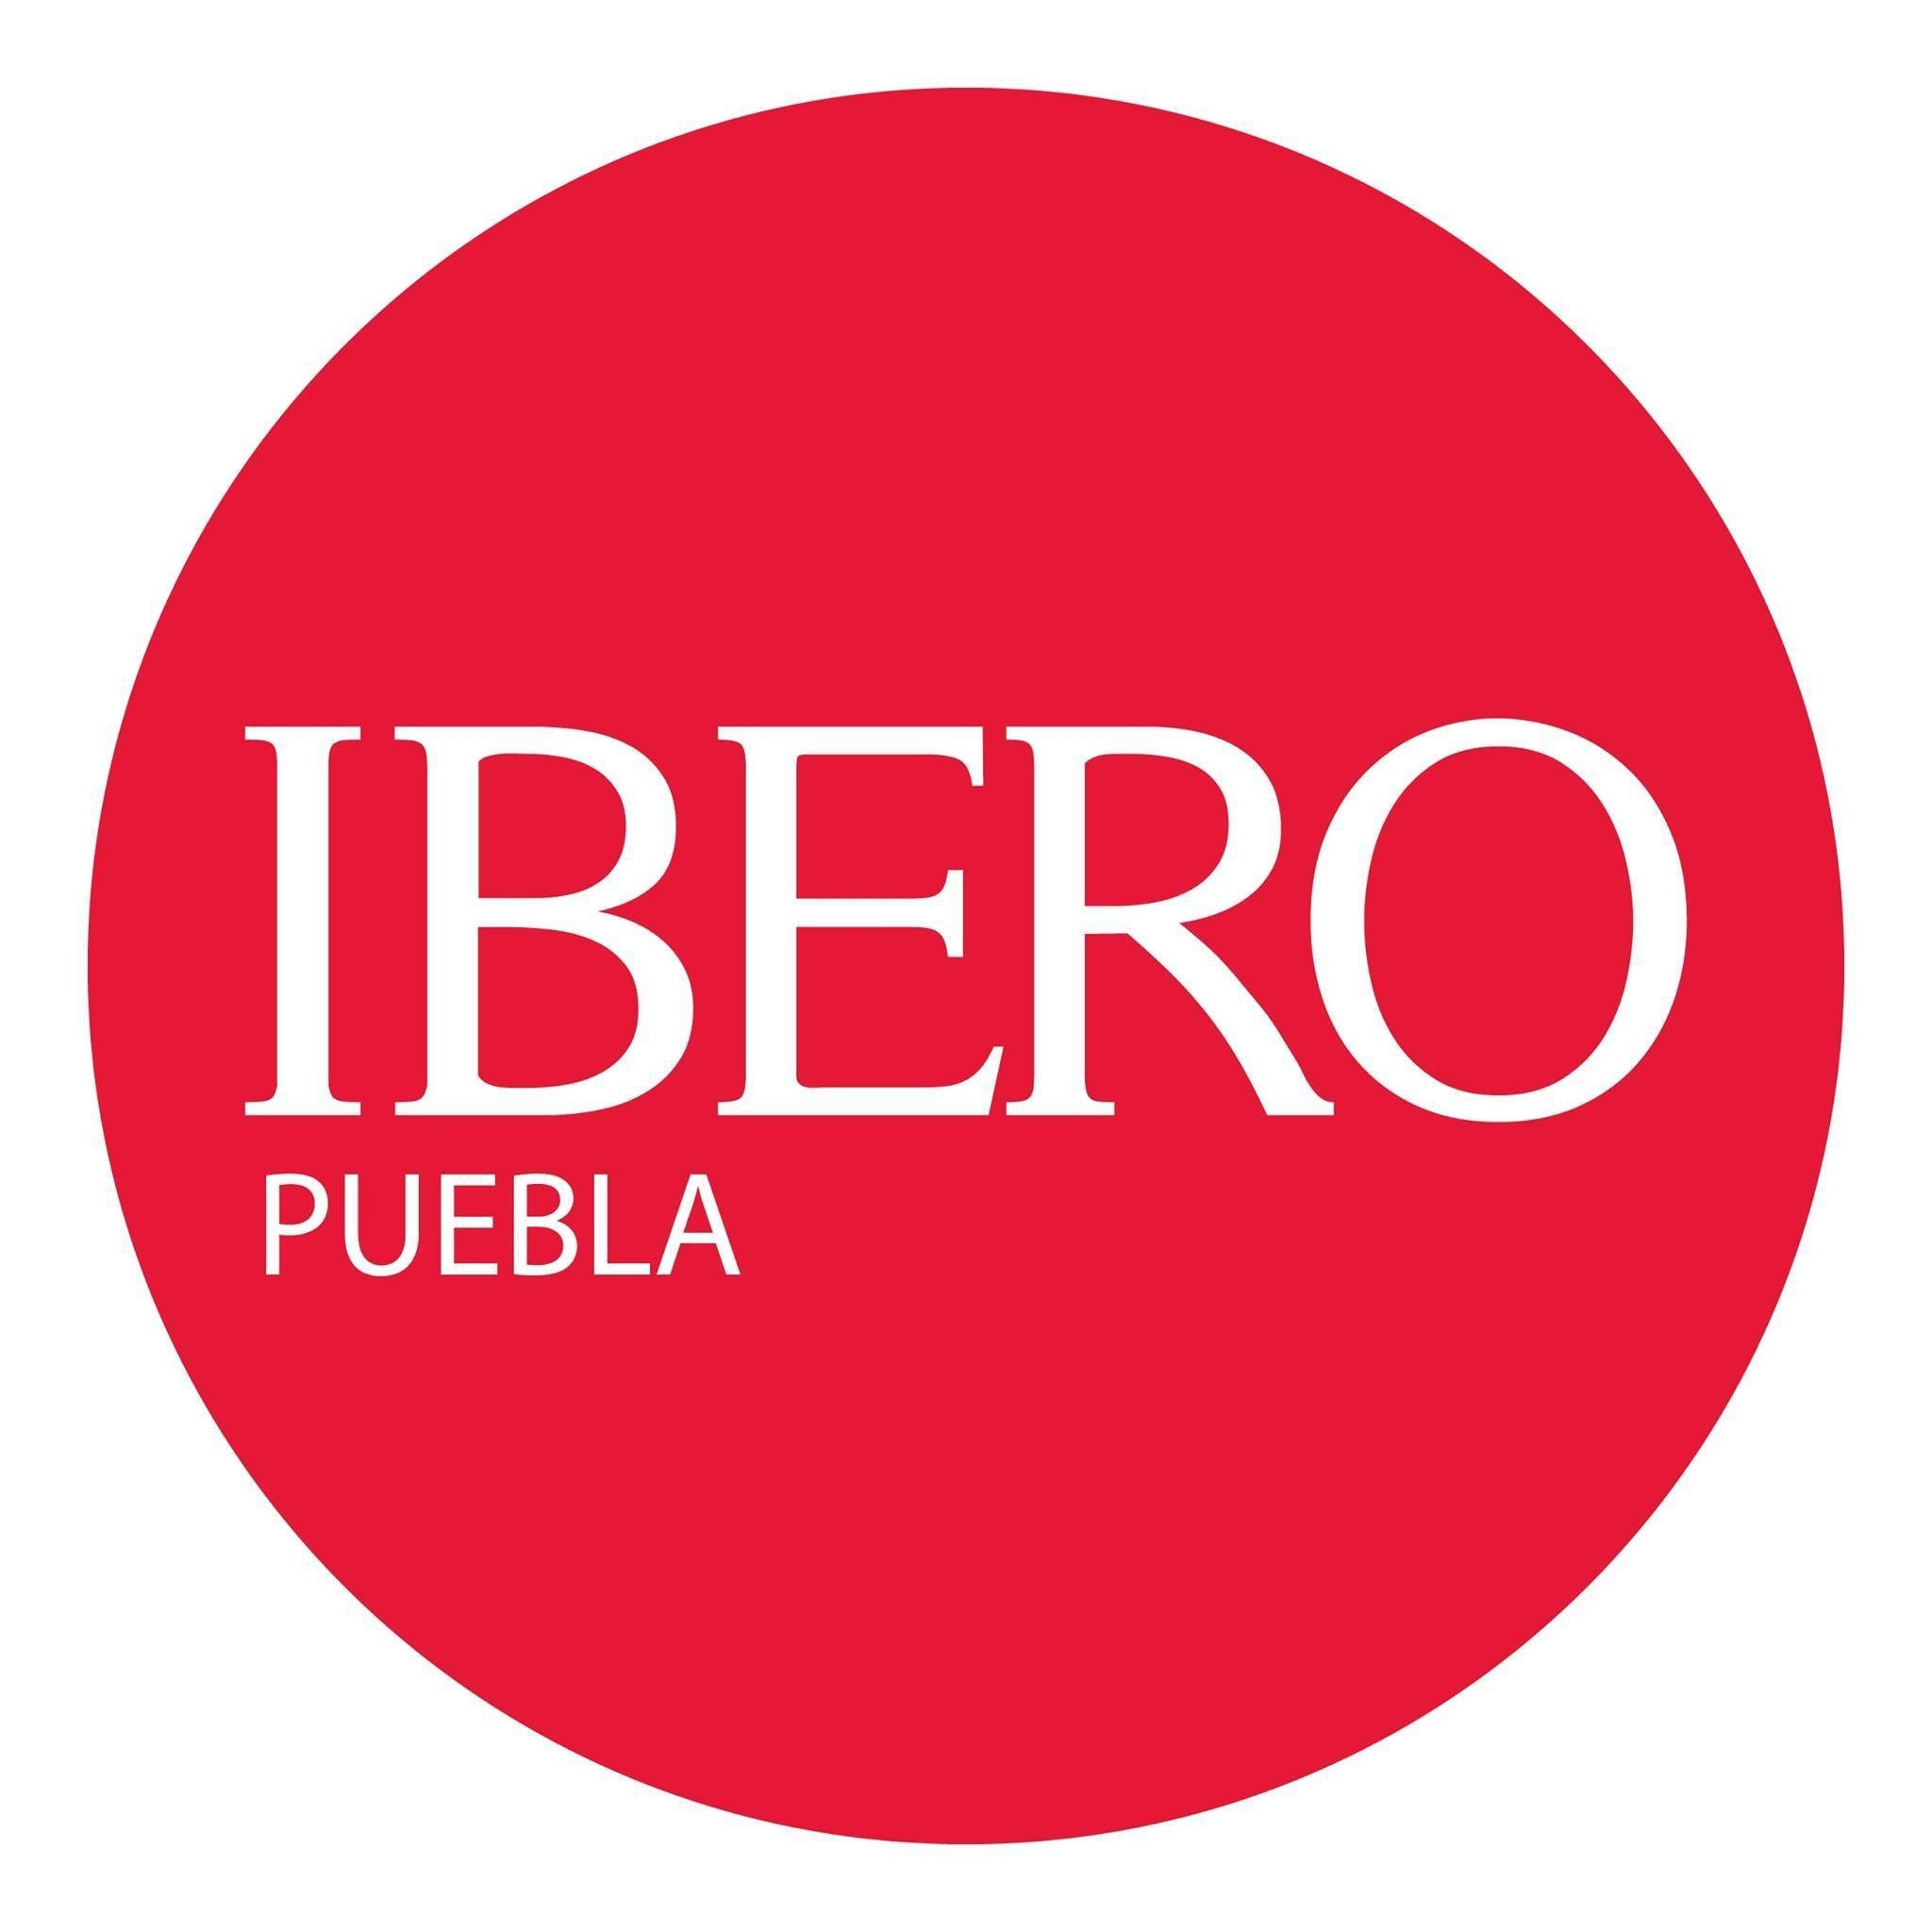 Universidad Iberoamericana Puebla